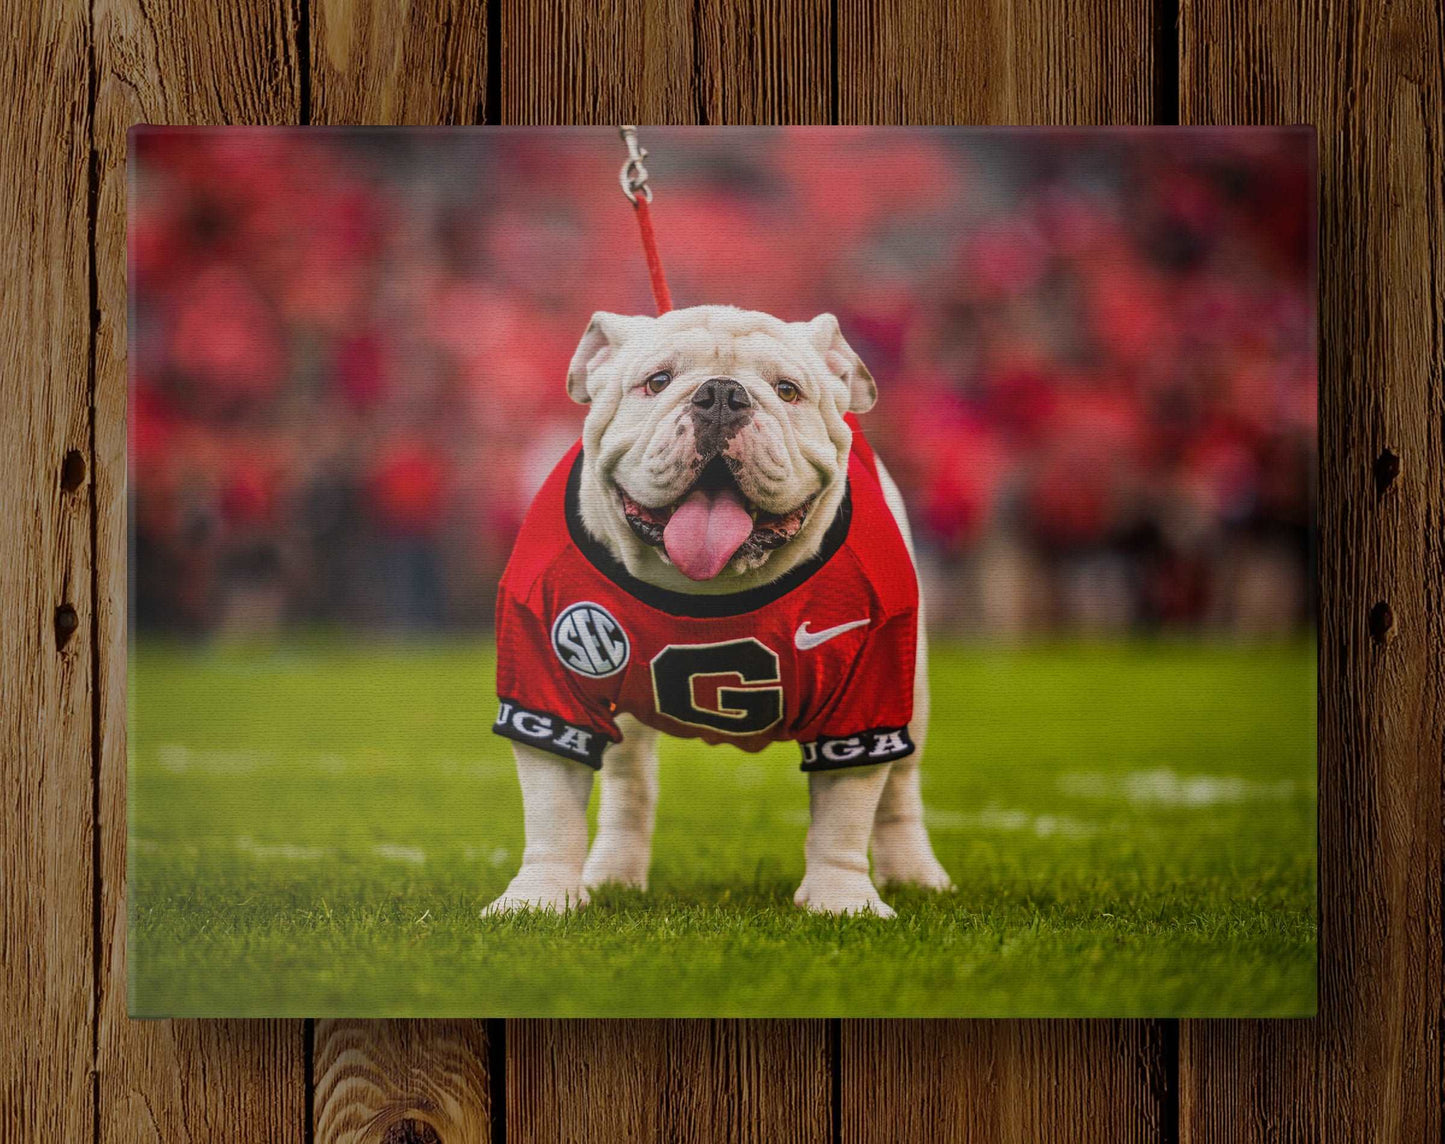 Uga X Mascot Photo Print & Canvas Wrap - Georgia Bulldogs Art